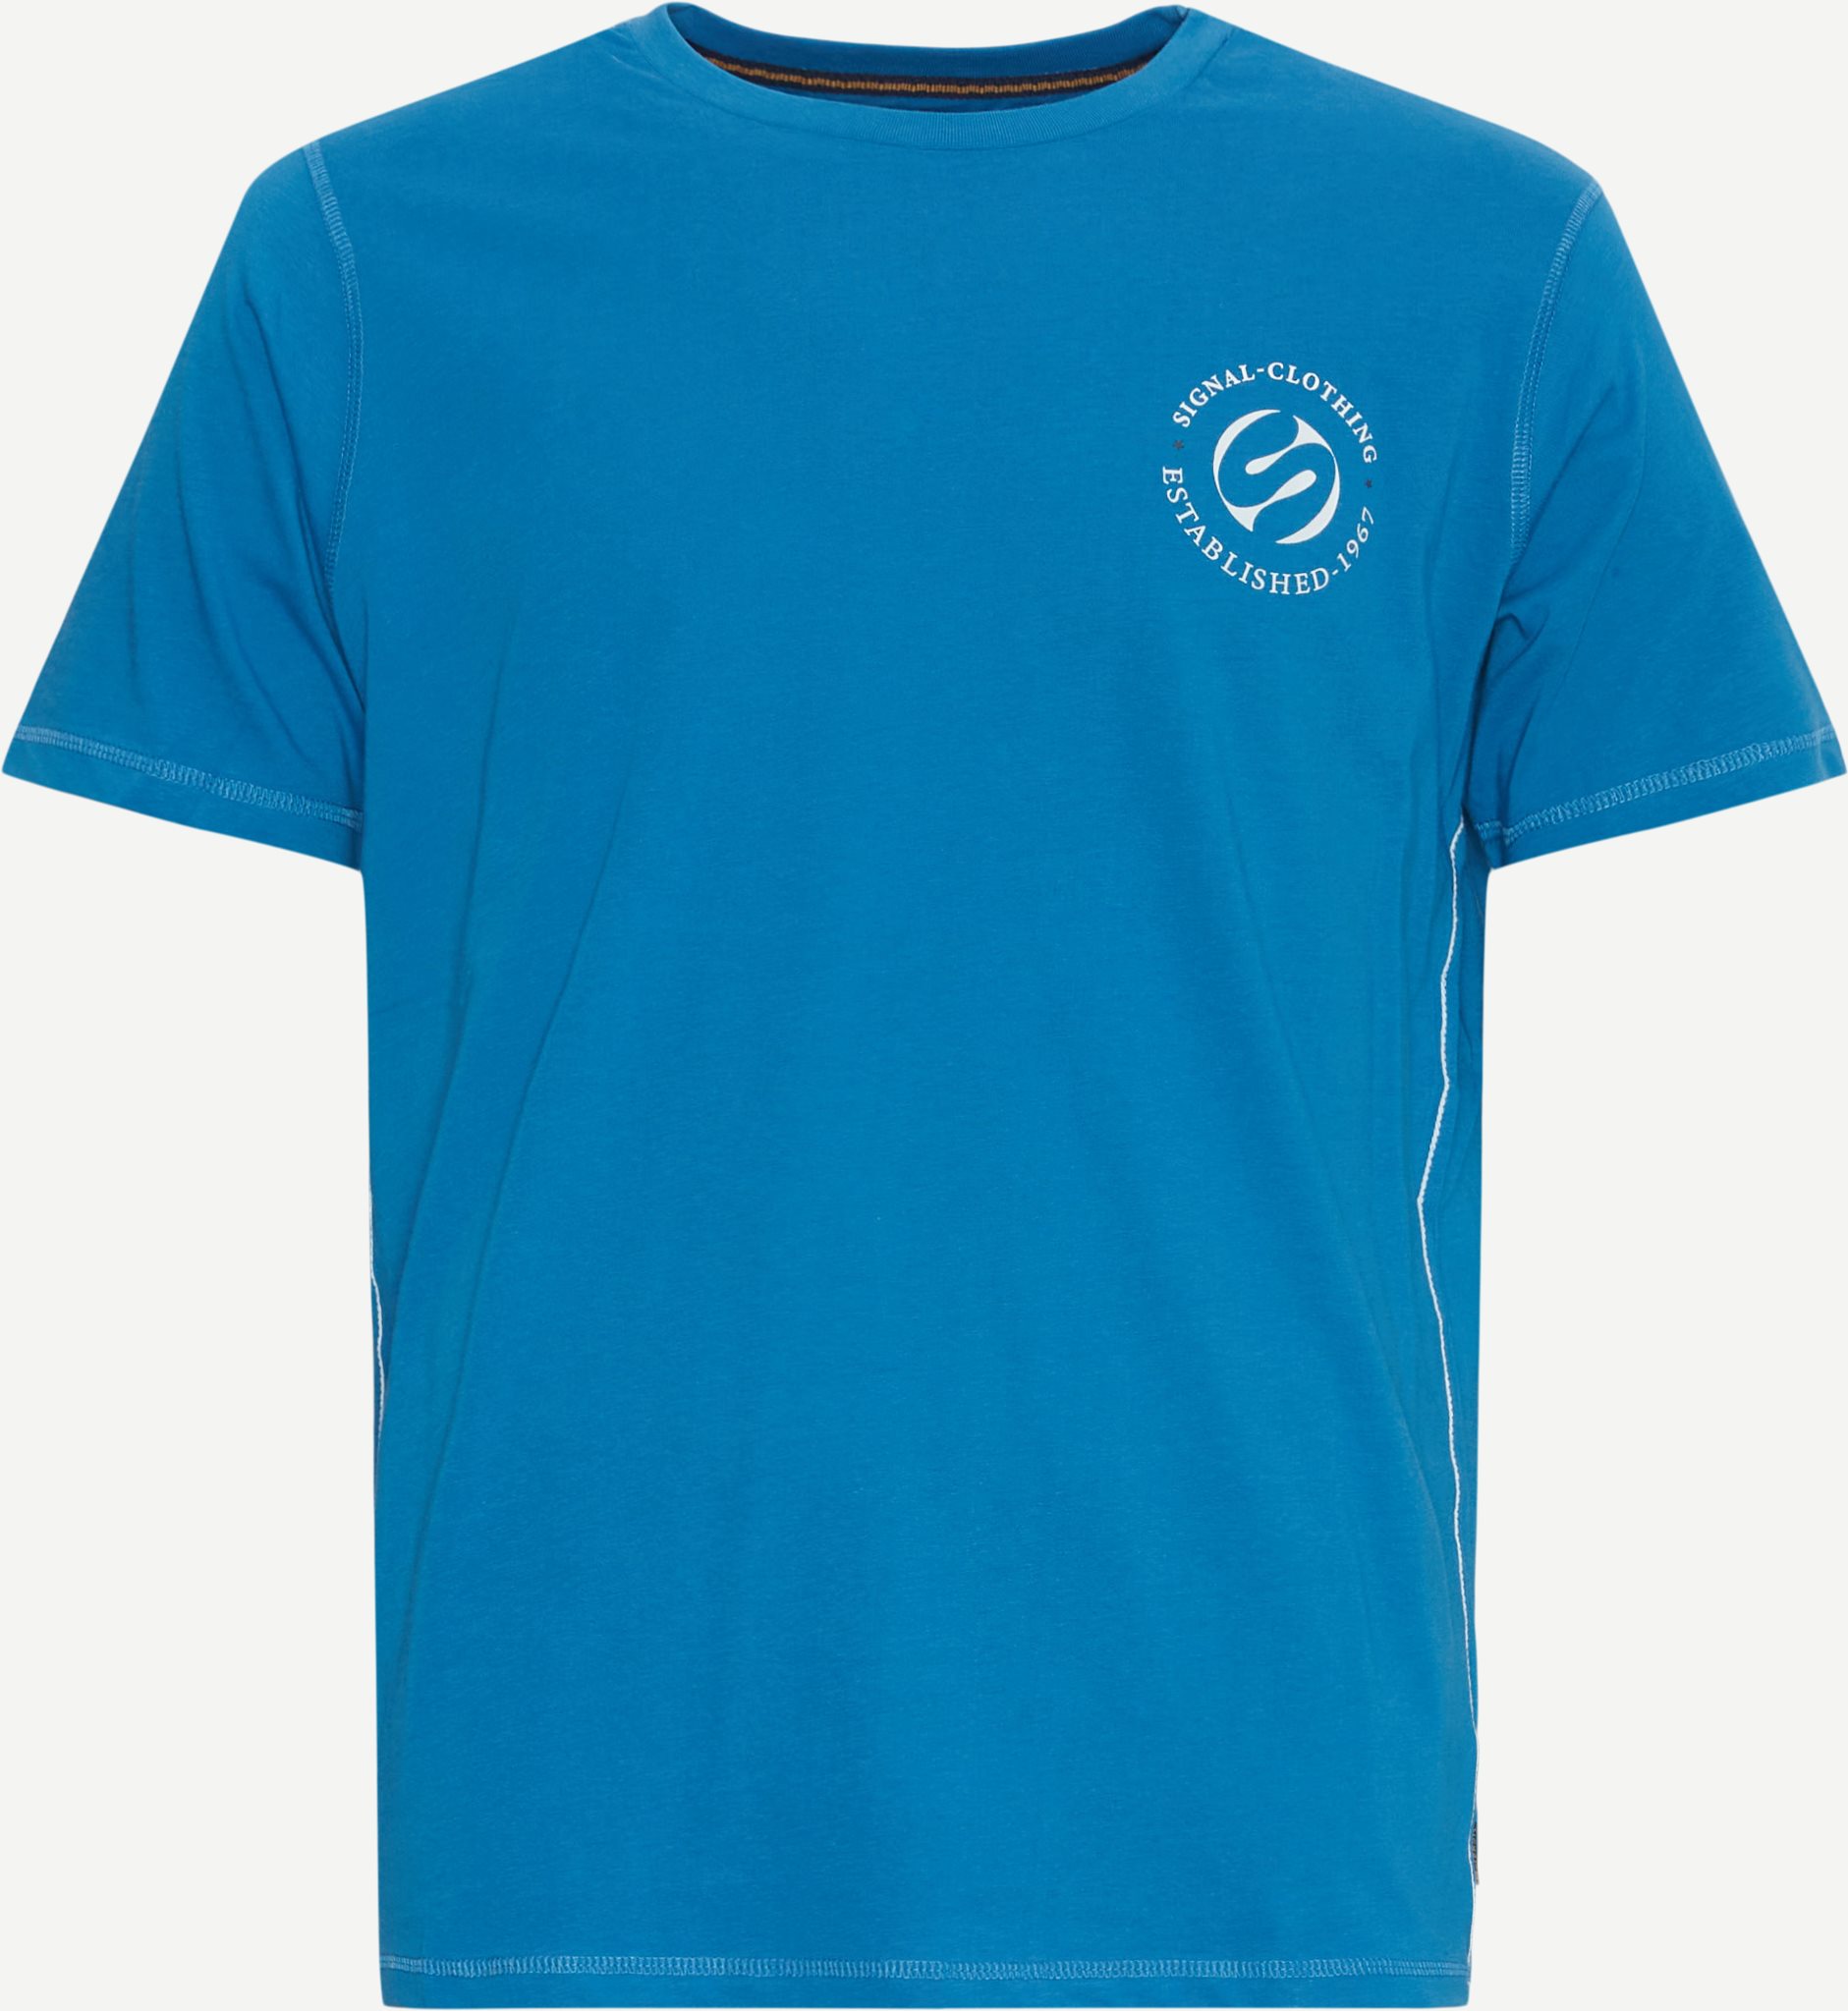 Signal T-shirts 13551 1595 Blå